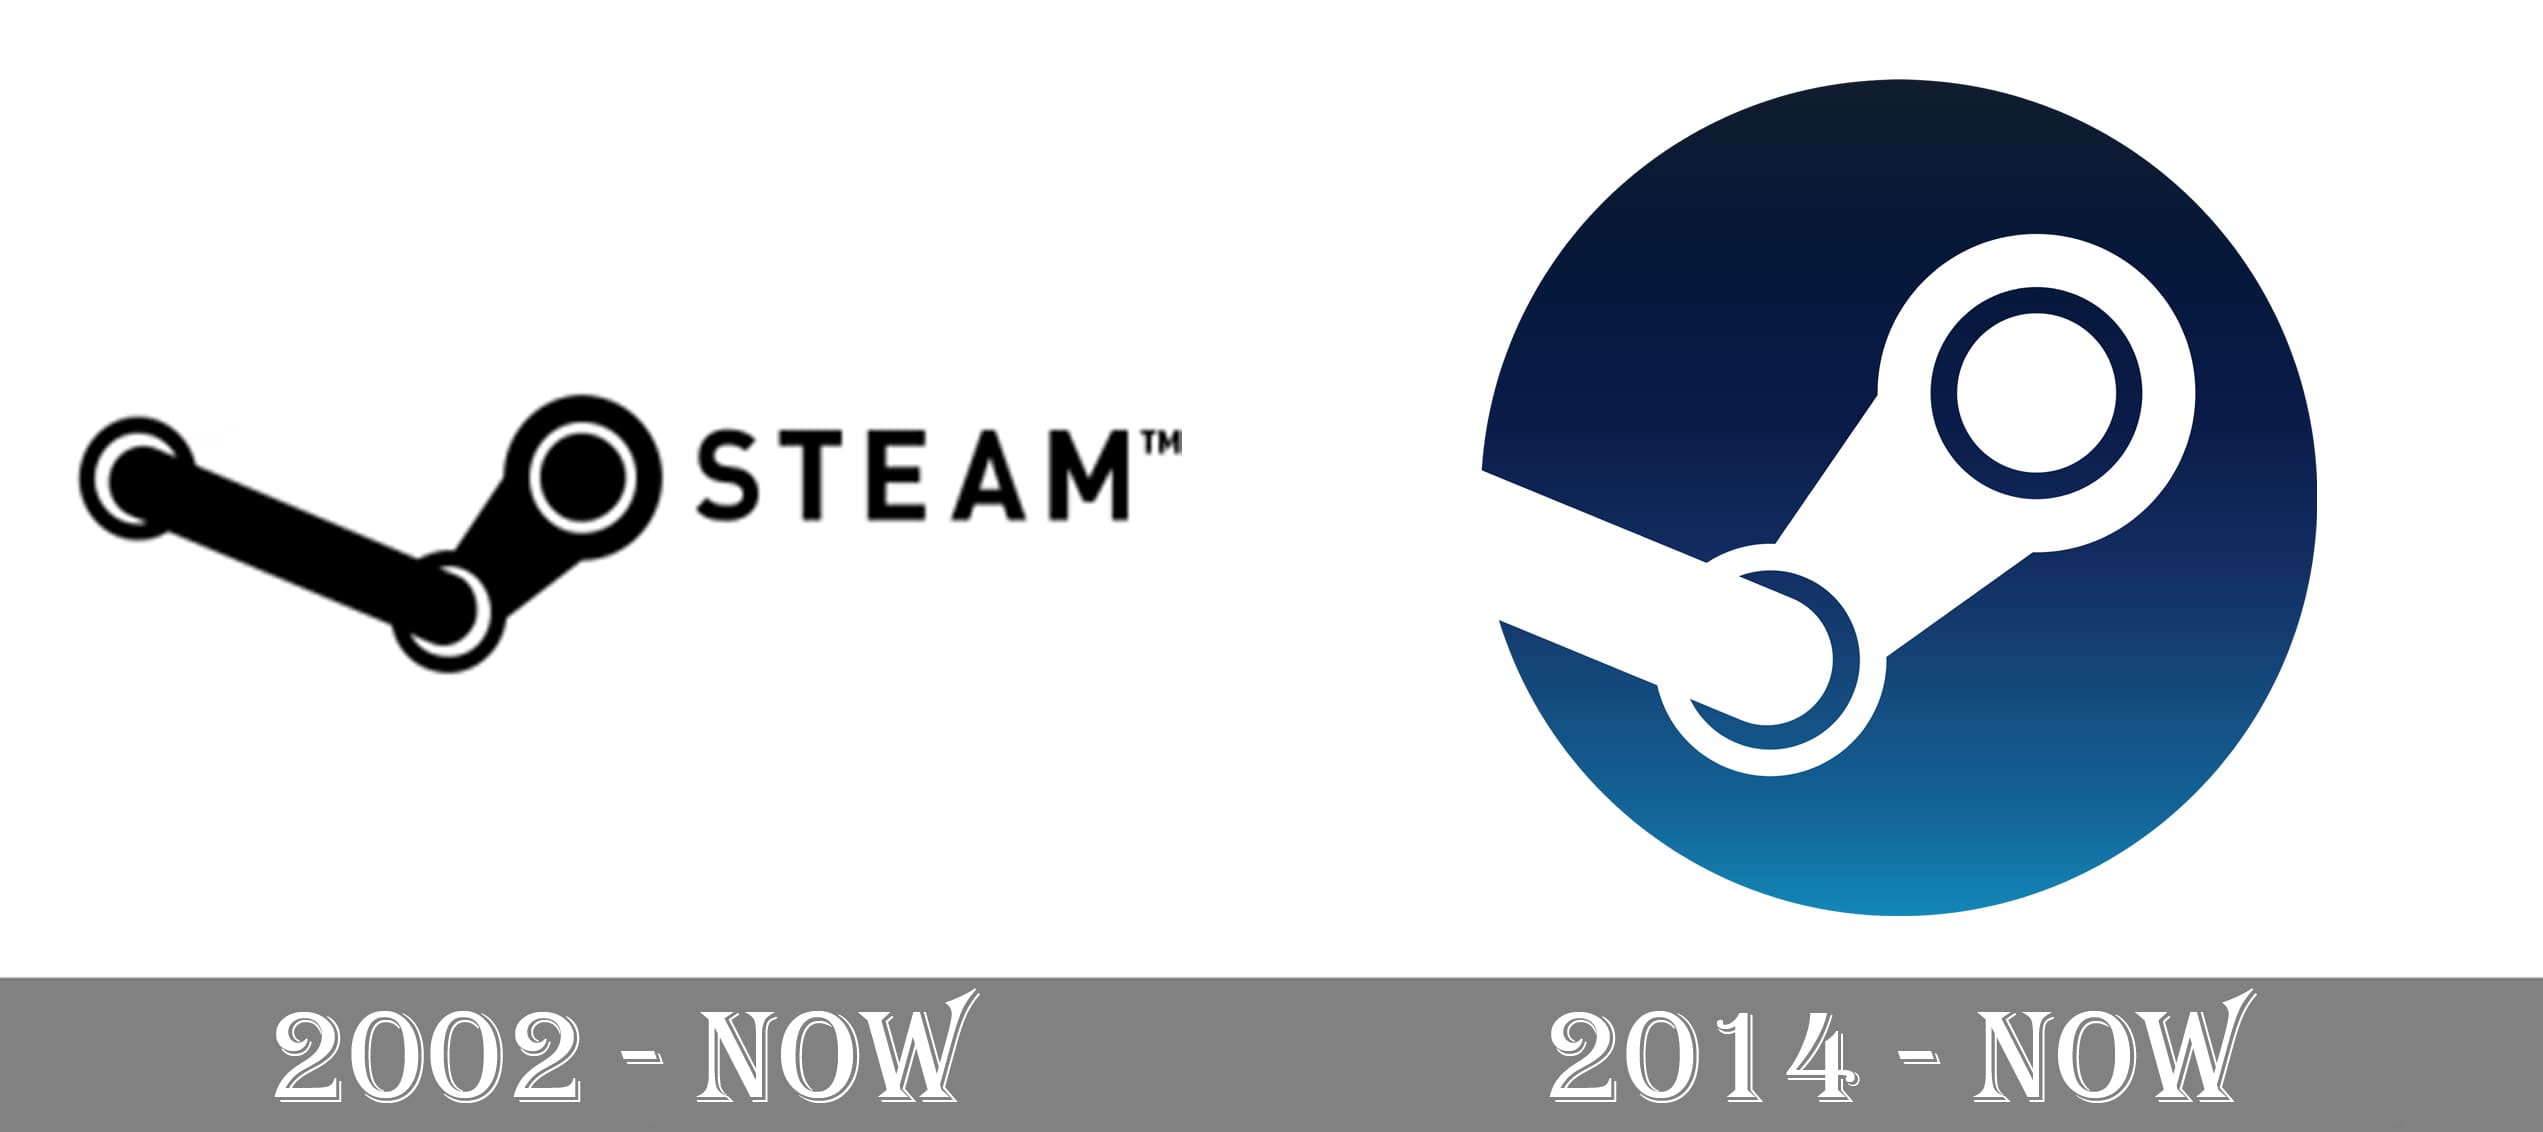 cool steam logos